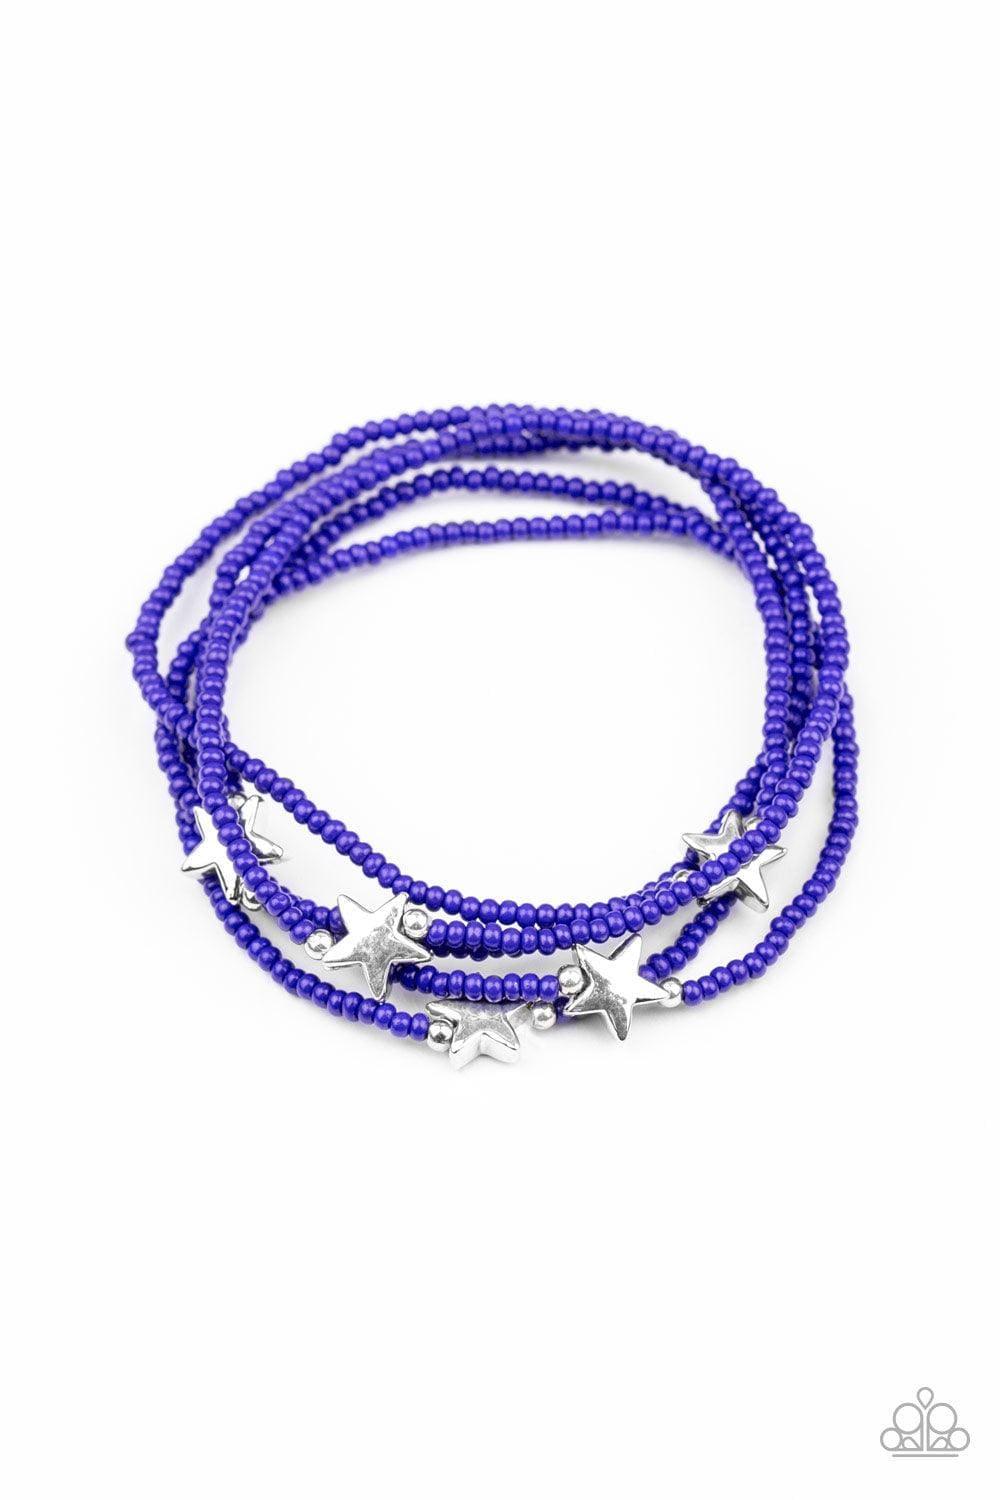 Paparazzi Accessories - Pretty Patriotic - Blue Bracelet - Bling by JessieK